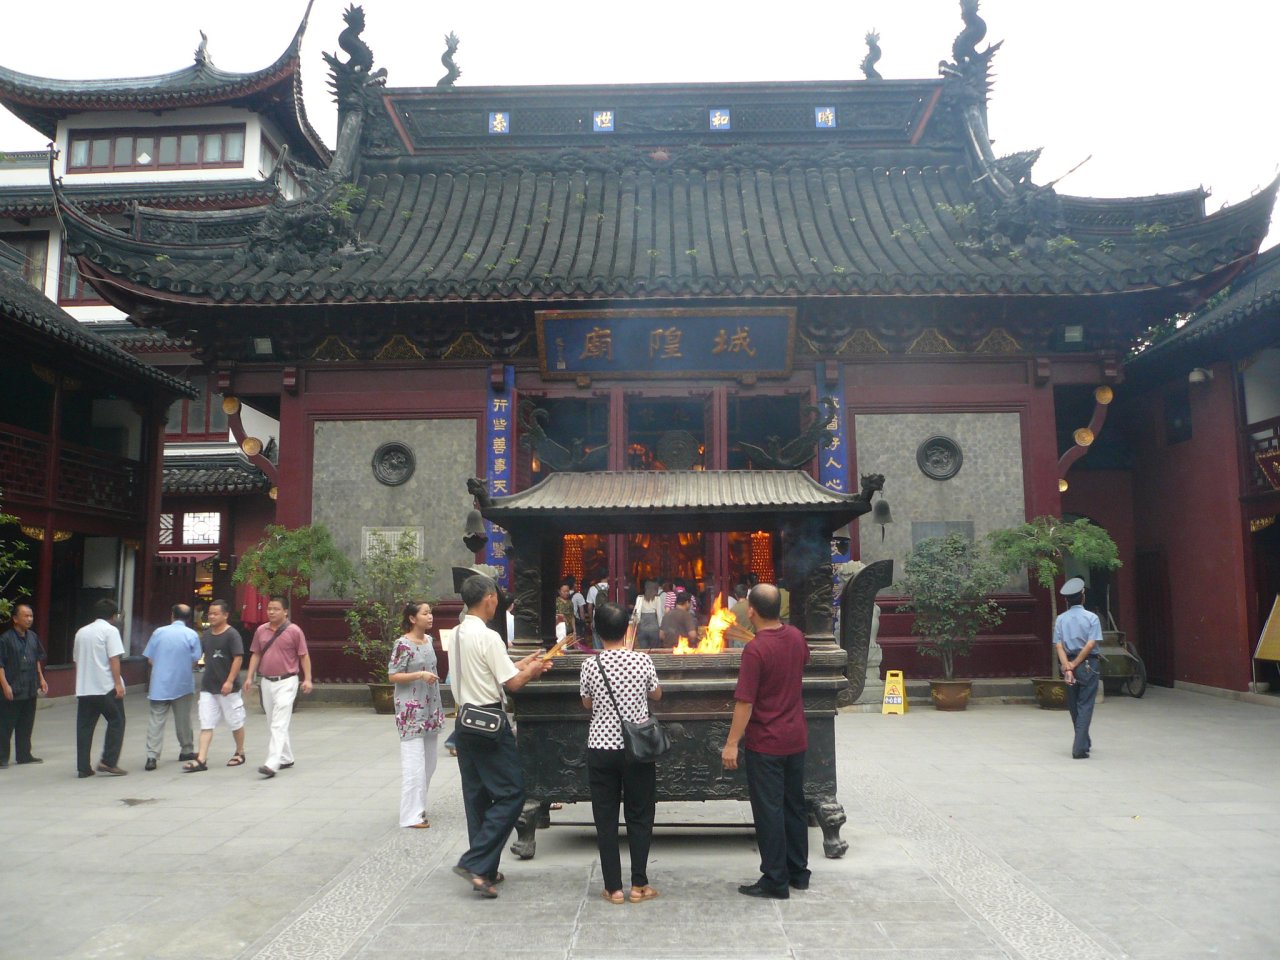 City God Temple of Shanghai, China